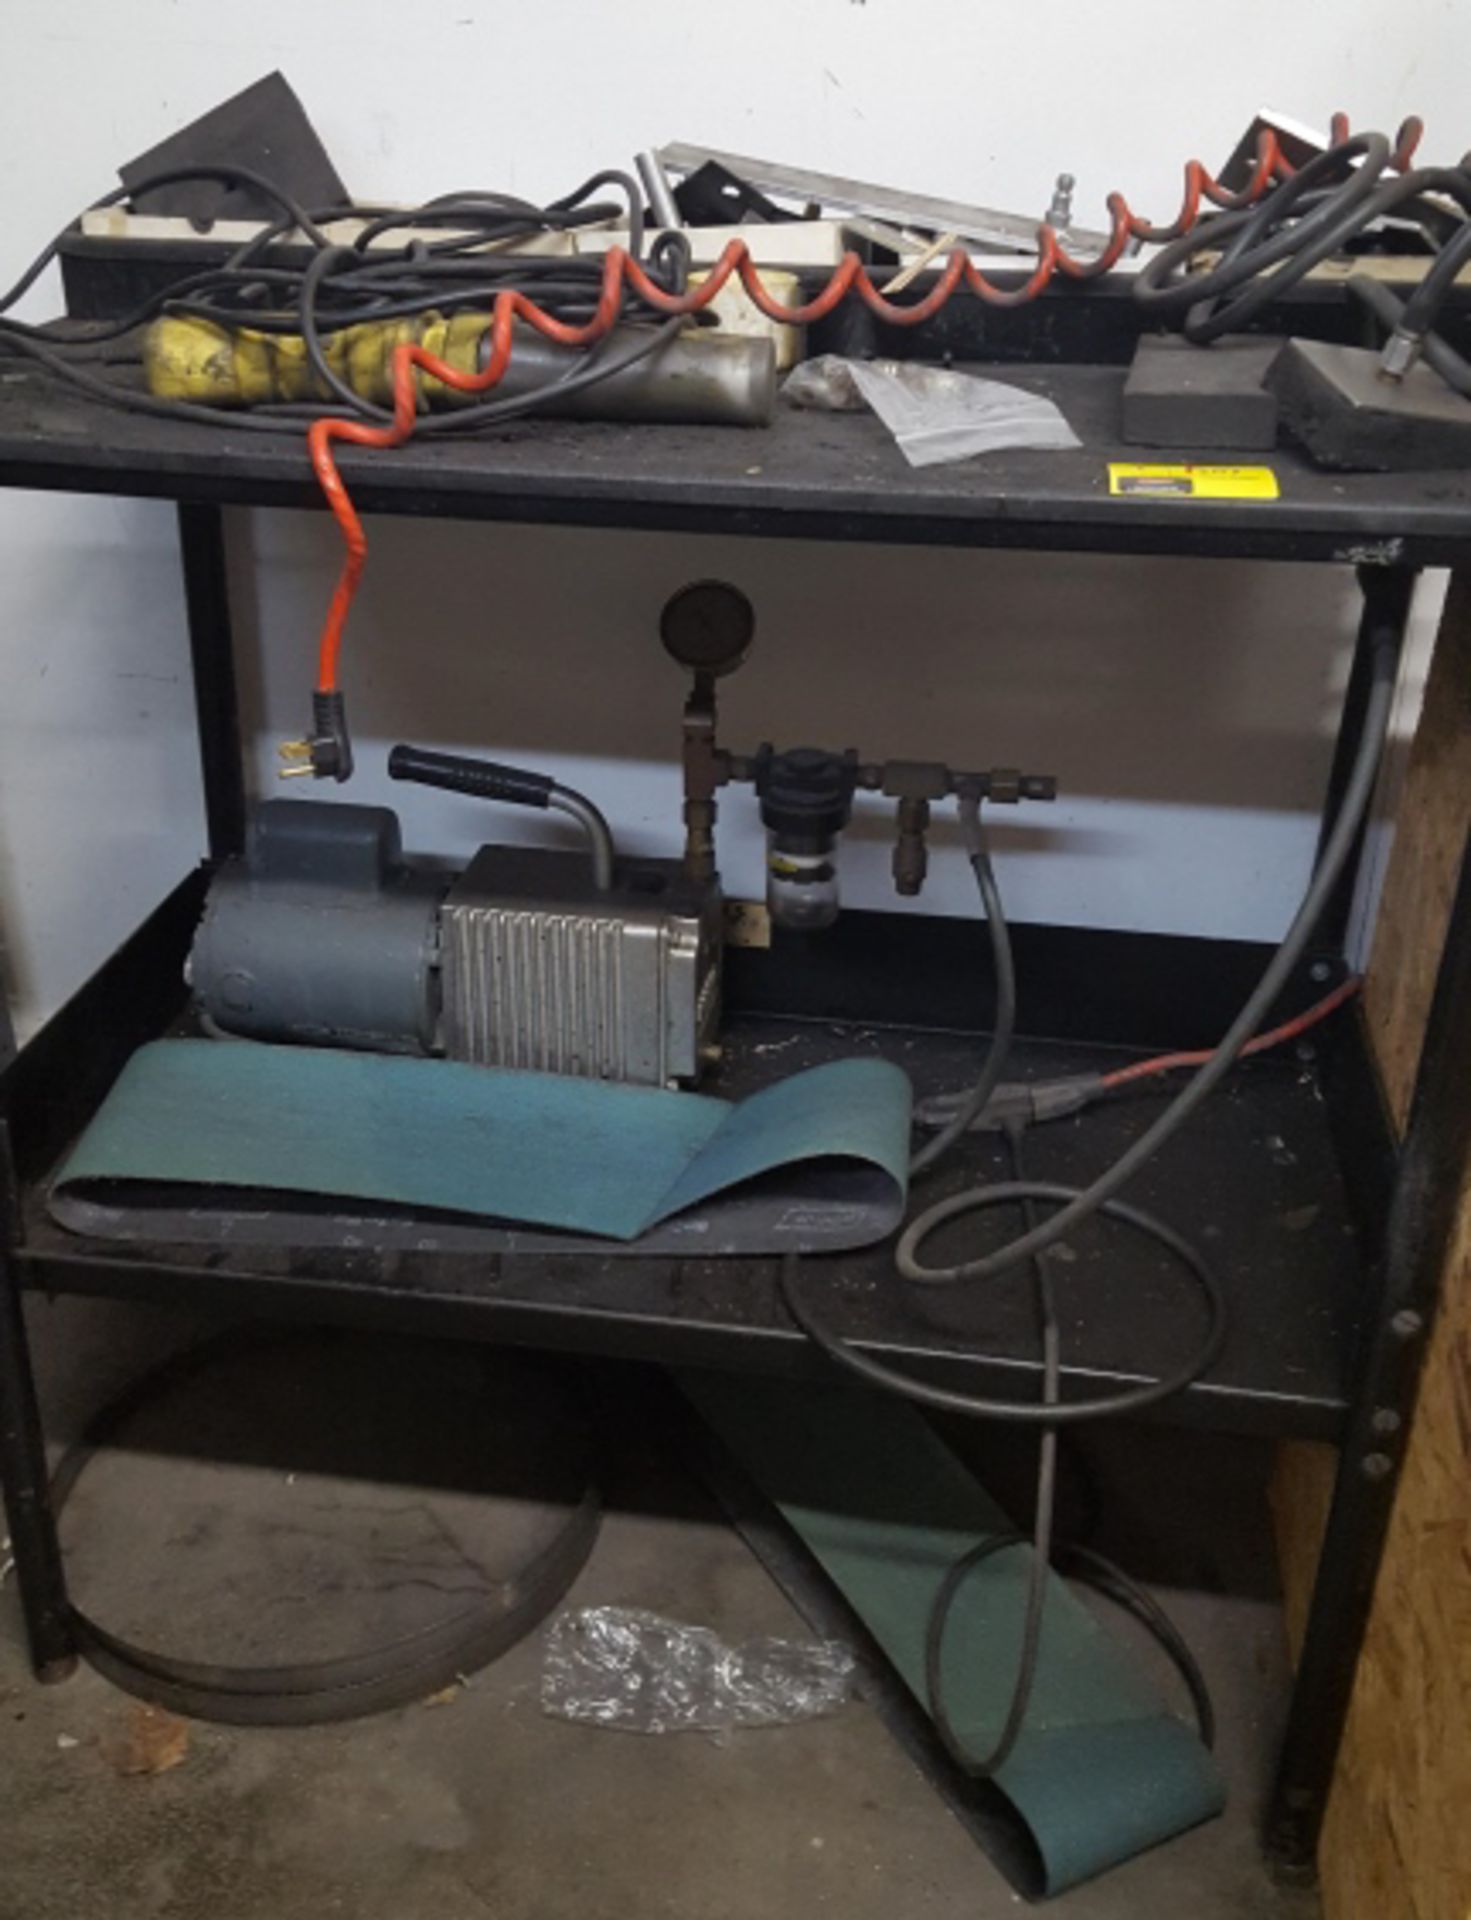 Shelf Unit w/Portable Compressor and Misc. Parts